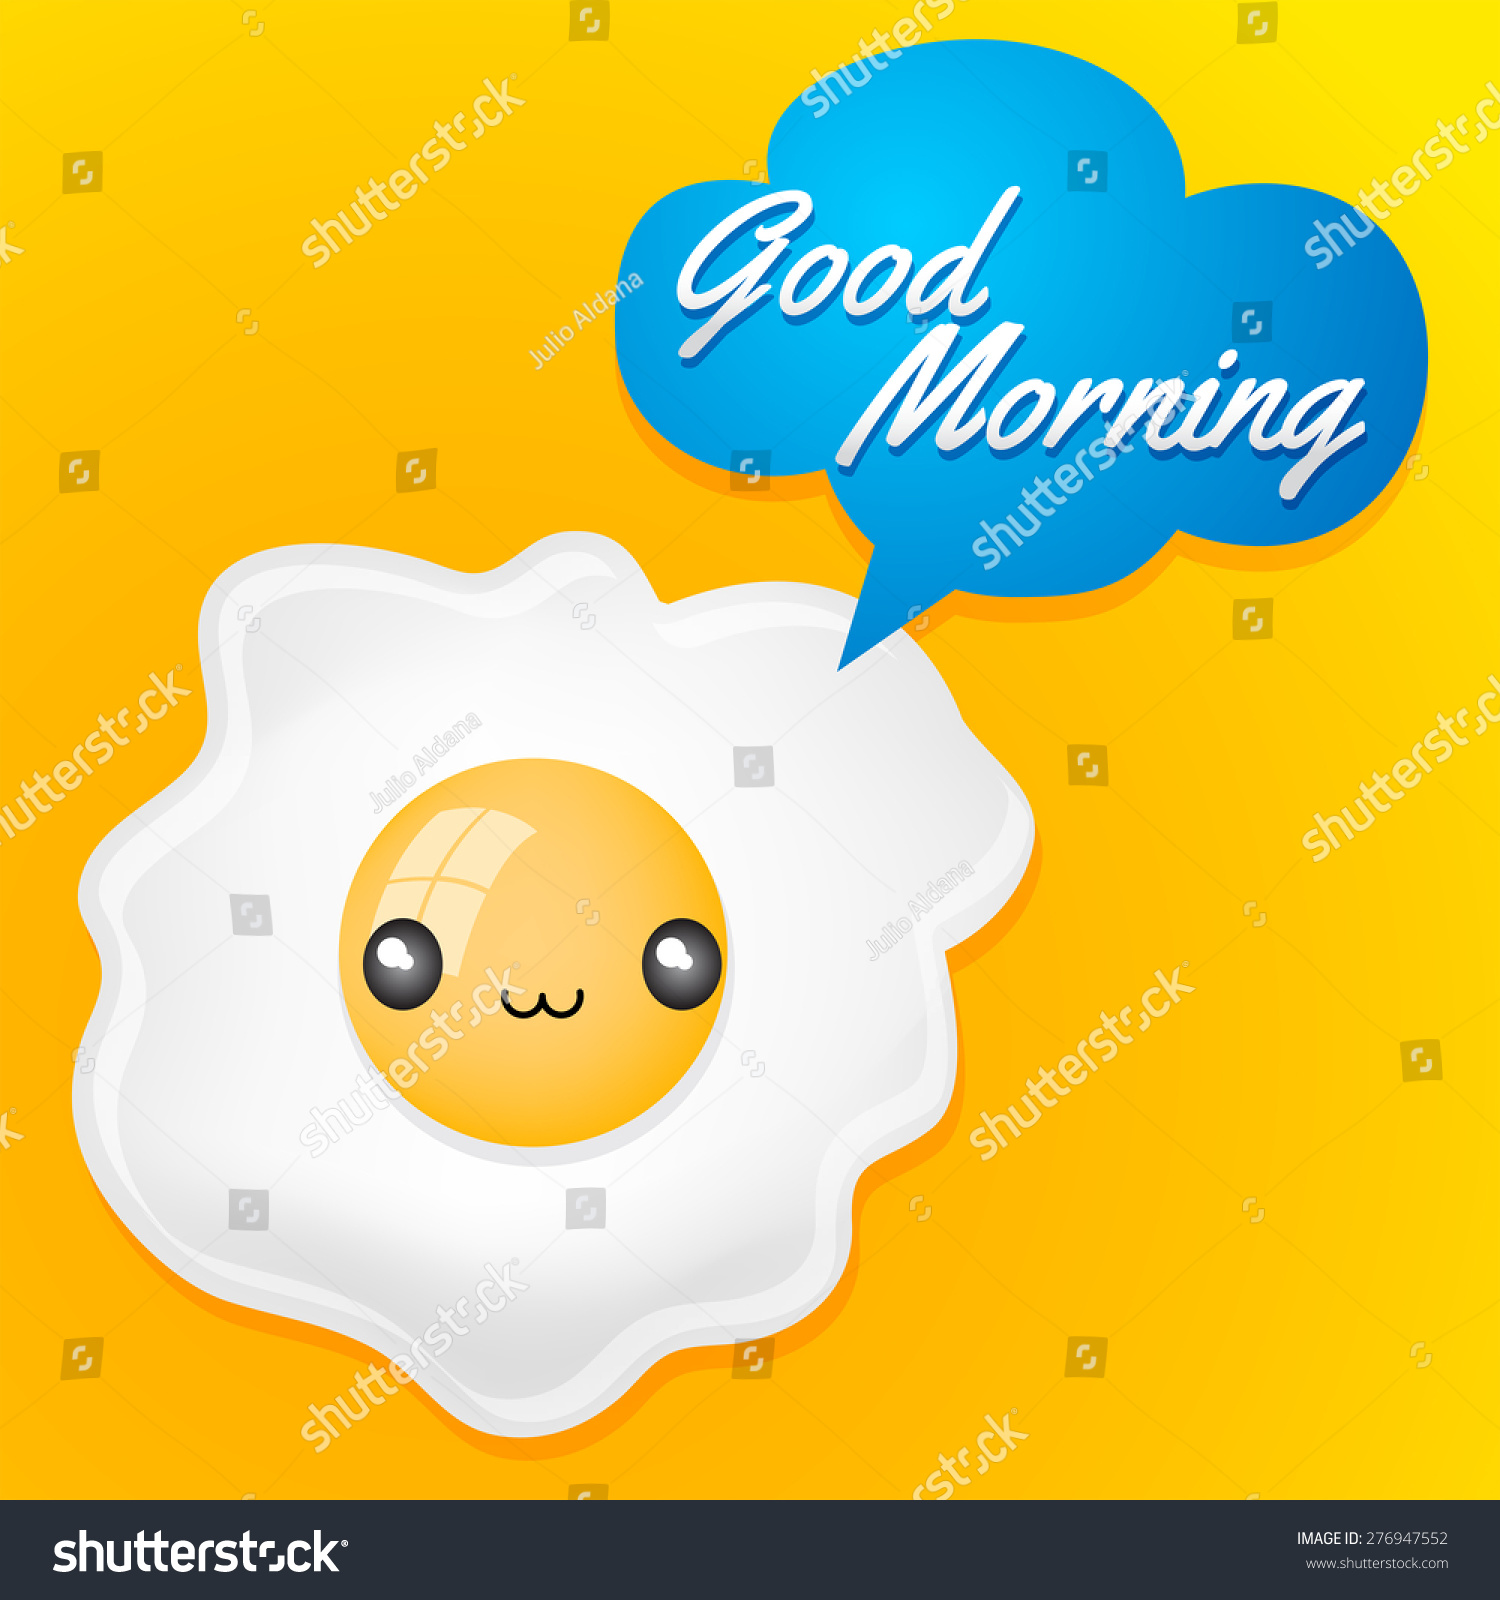 Good Morning - Cute Fried Egg With Balloon Card - Anime Kawaii Style ...